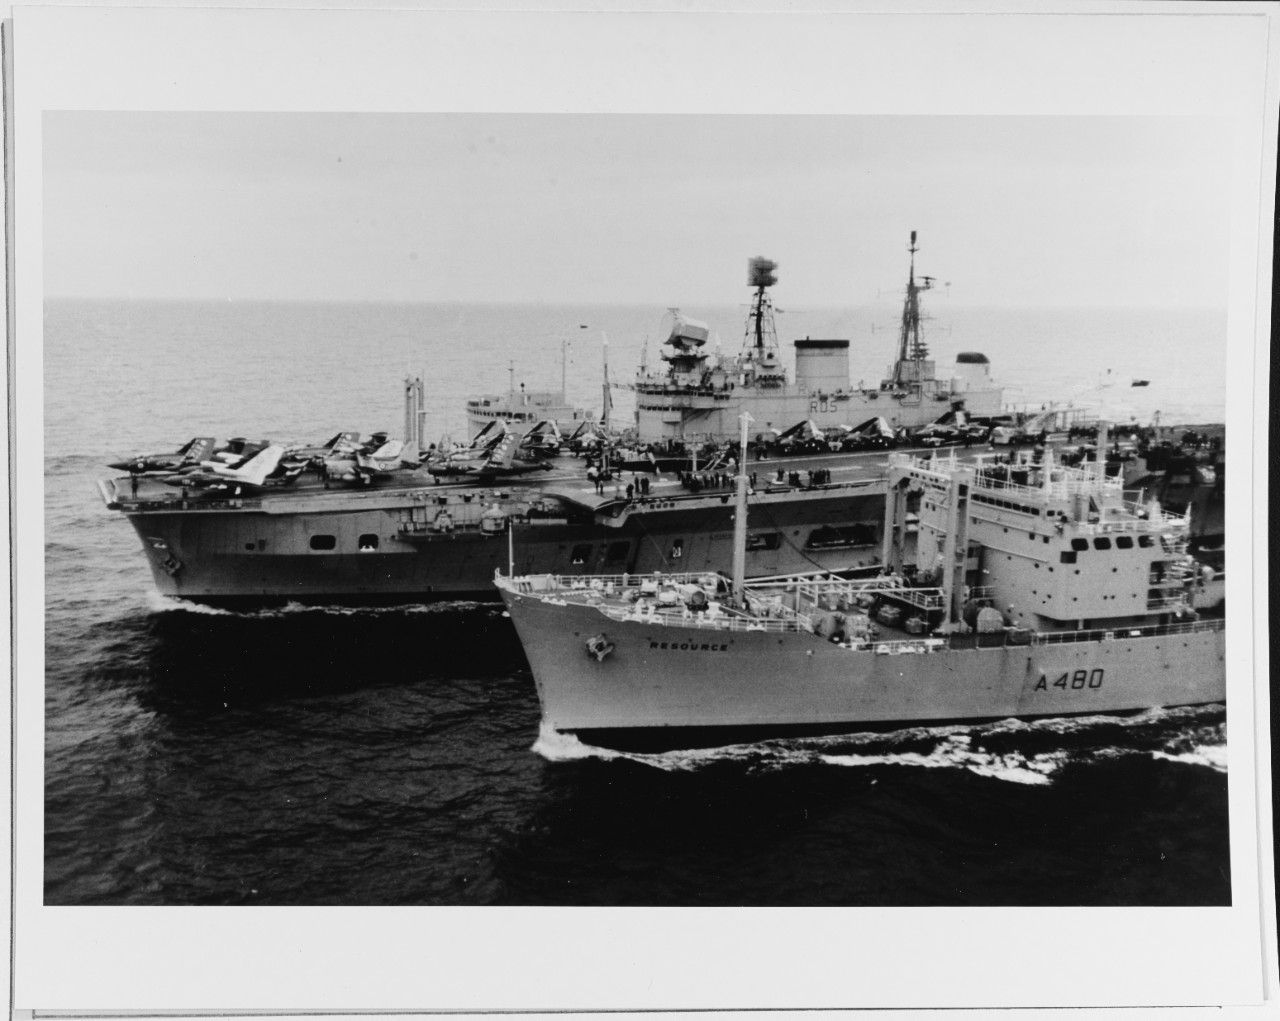 HMS EAGLE and HMS RESOURCE